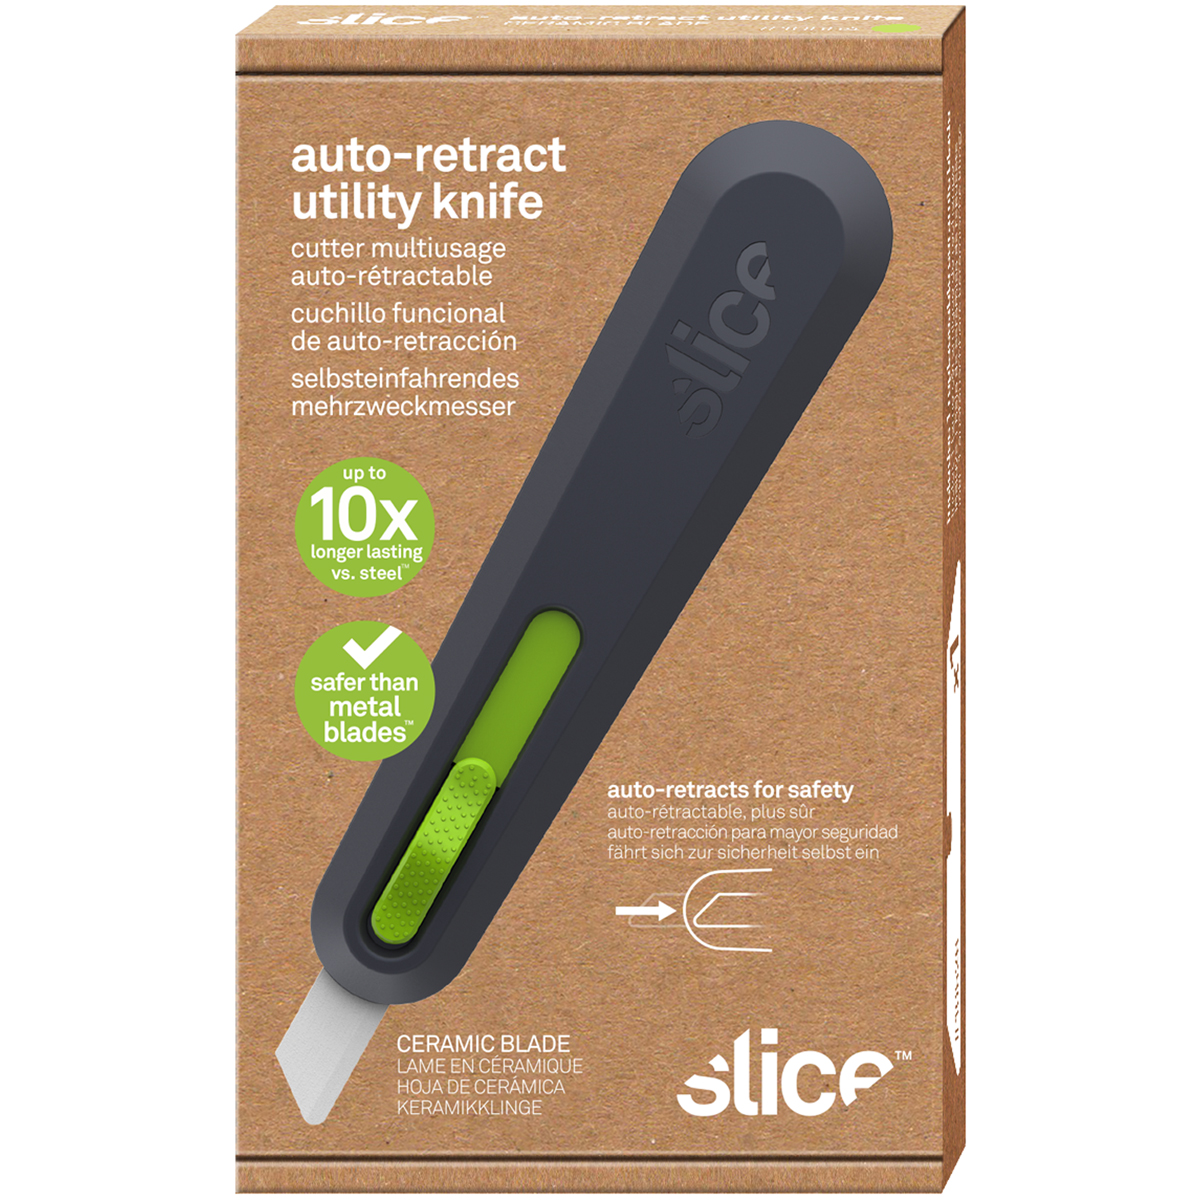 S10554 Auto-retract Utility Knife Safe Ceramic Blade - Gray